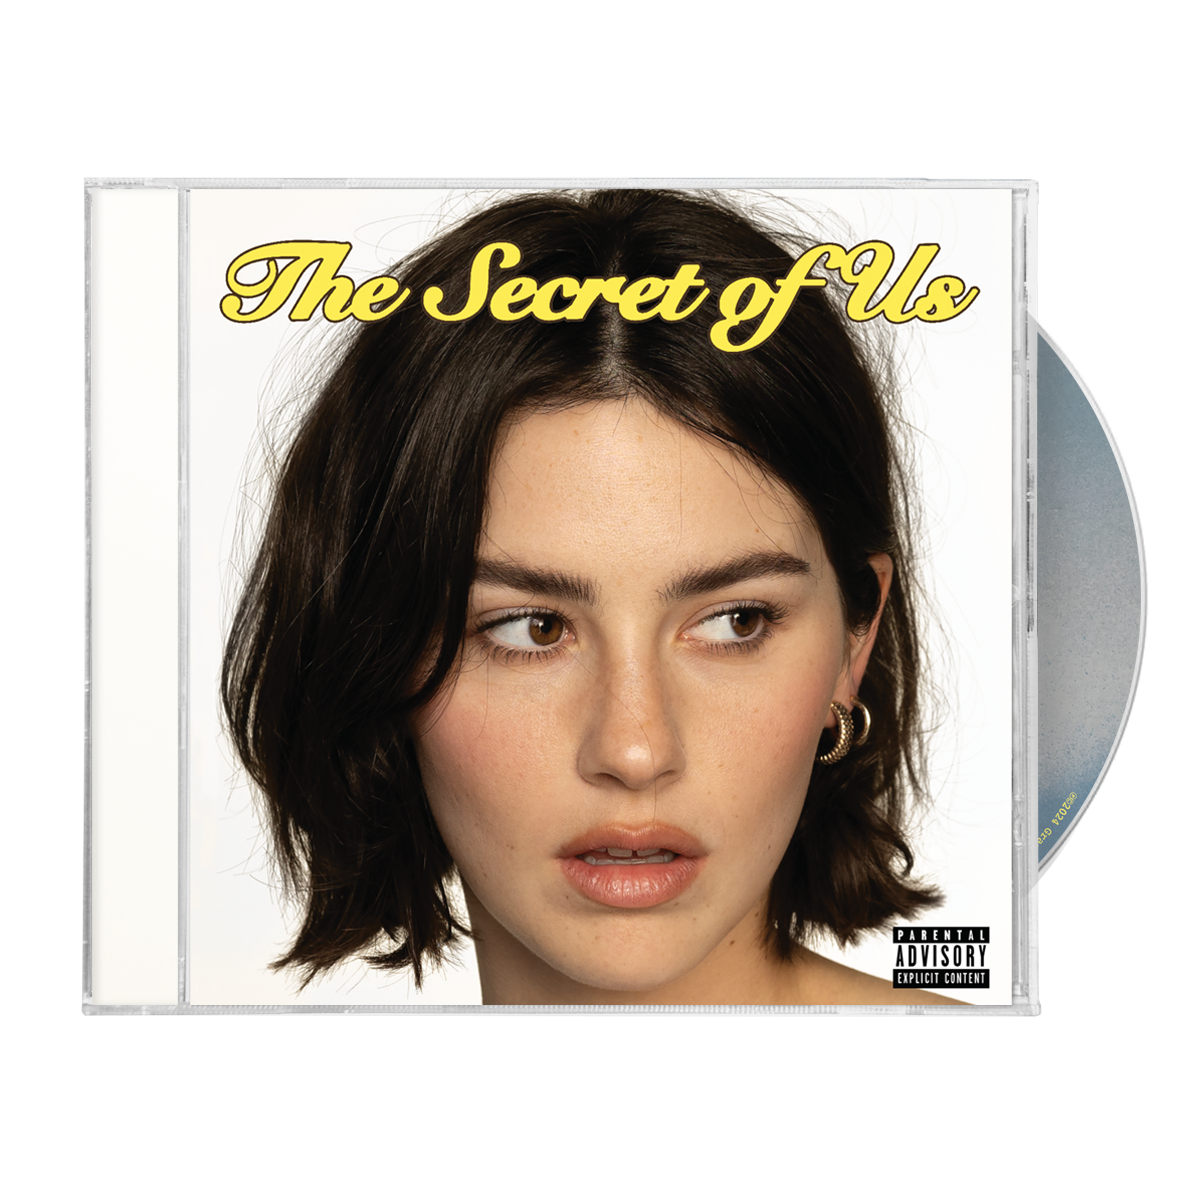 The Secret of Us: Limited Purple Vinyl LP, CD + Signed Art Card